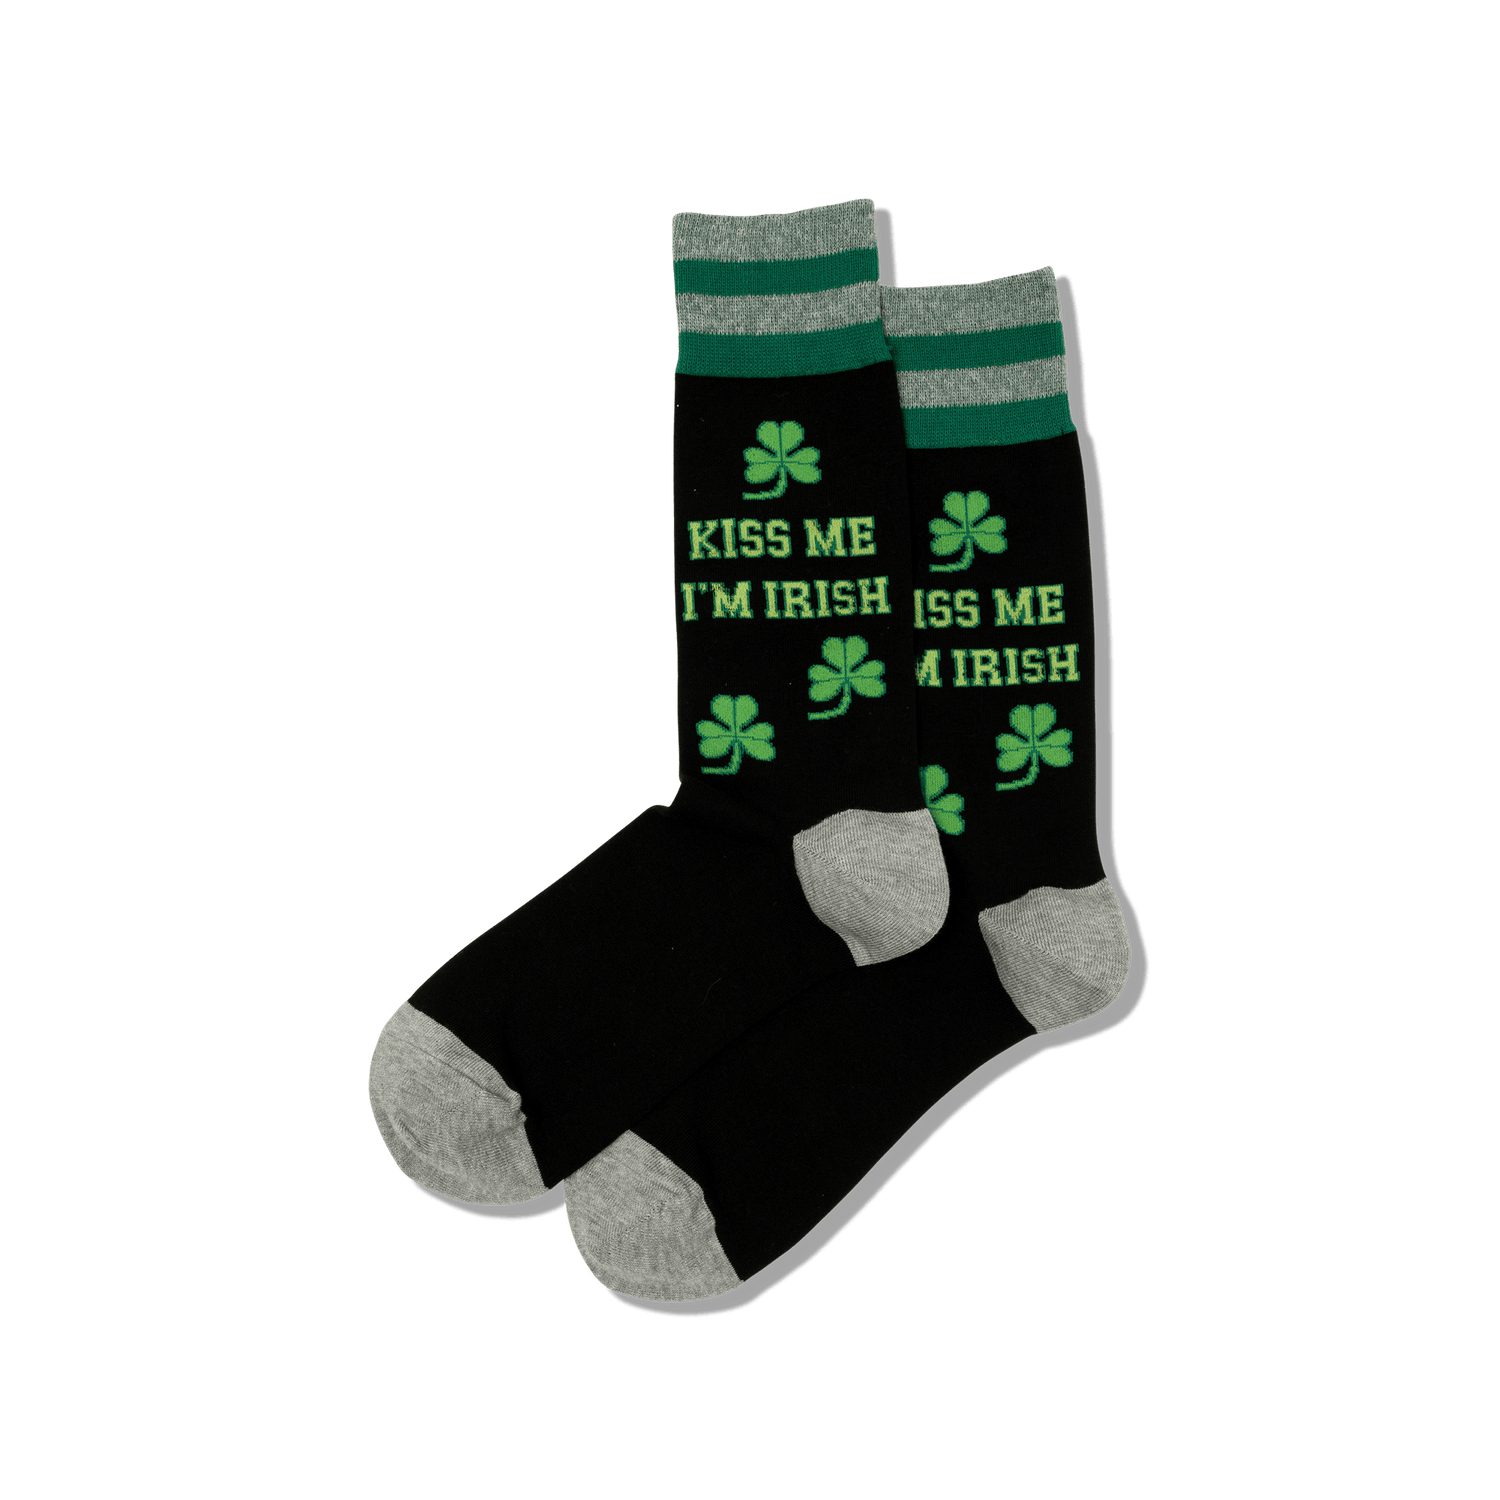 Hot sox mens kiss me i'm irish novelty sock